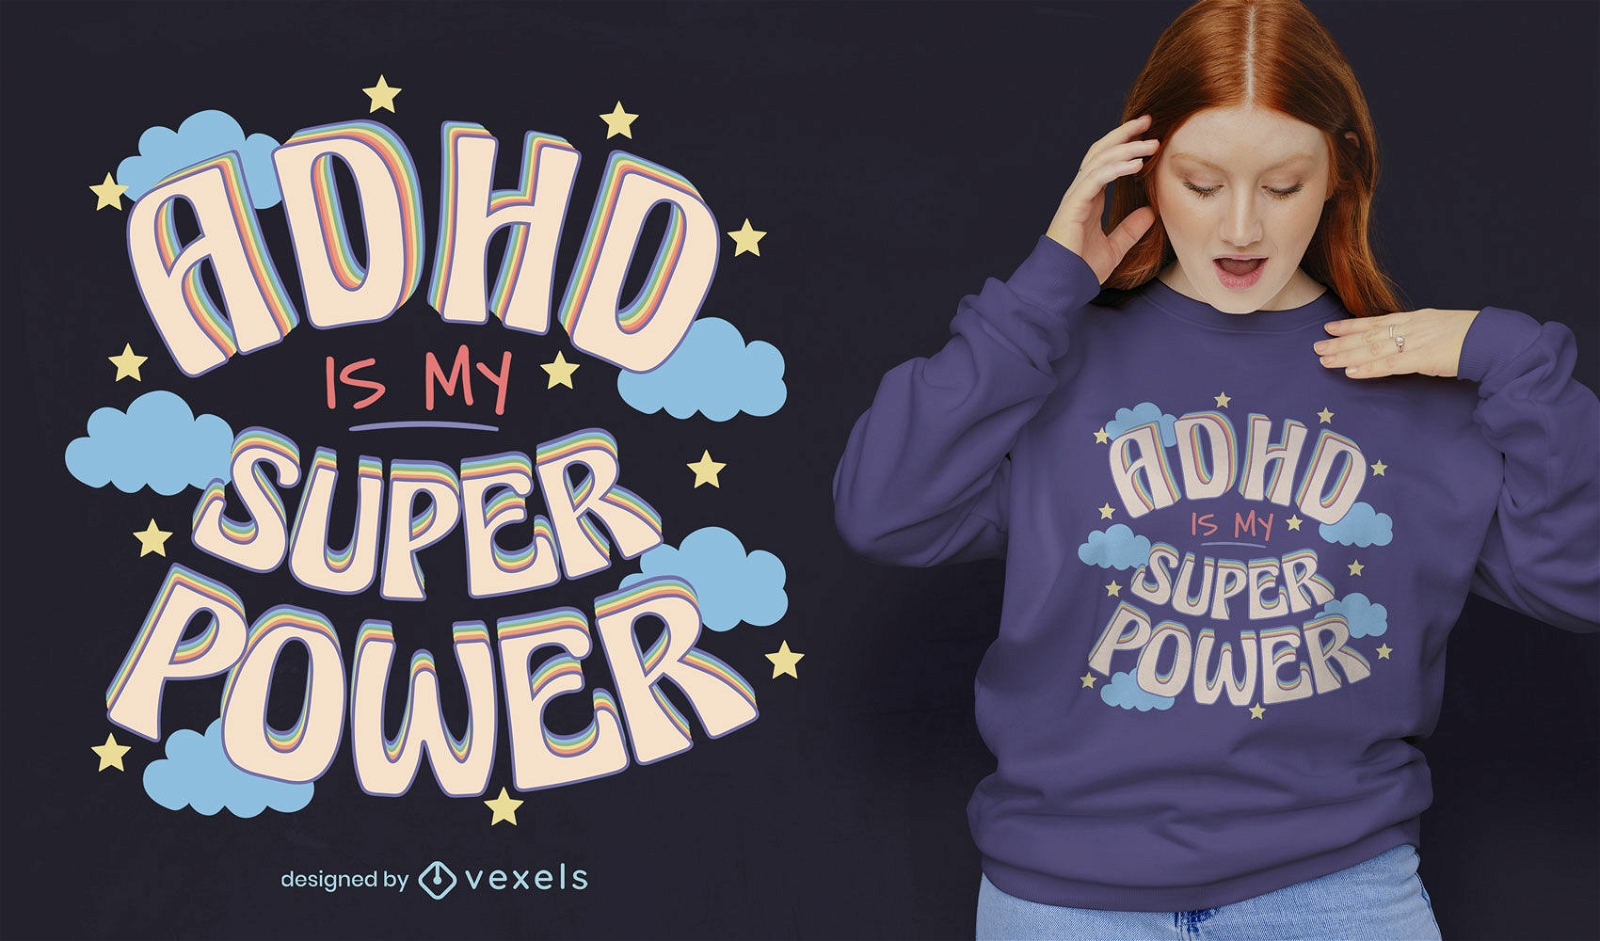 ADHD superpower quote t-shirt design